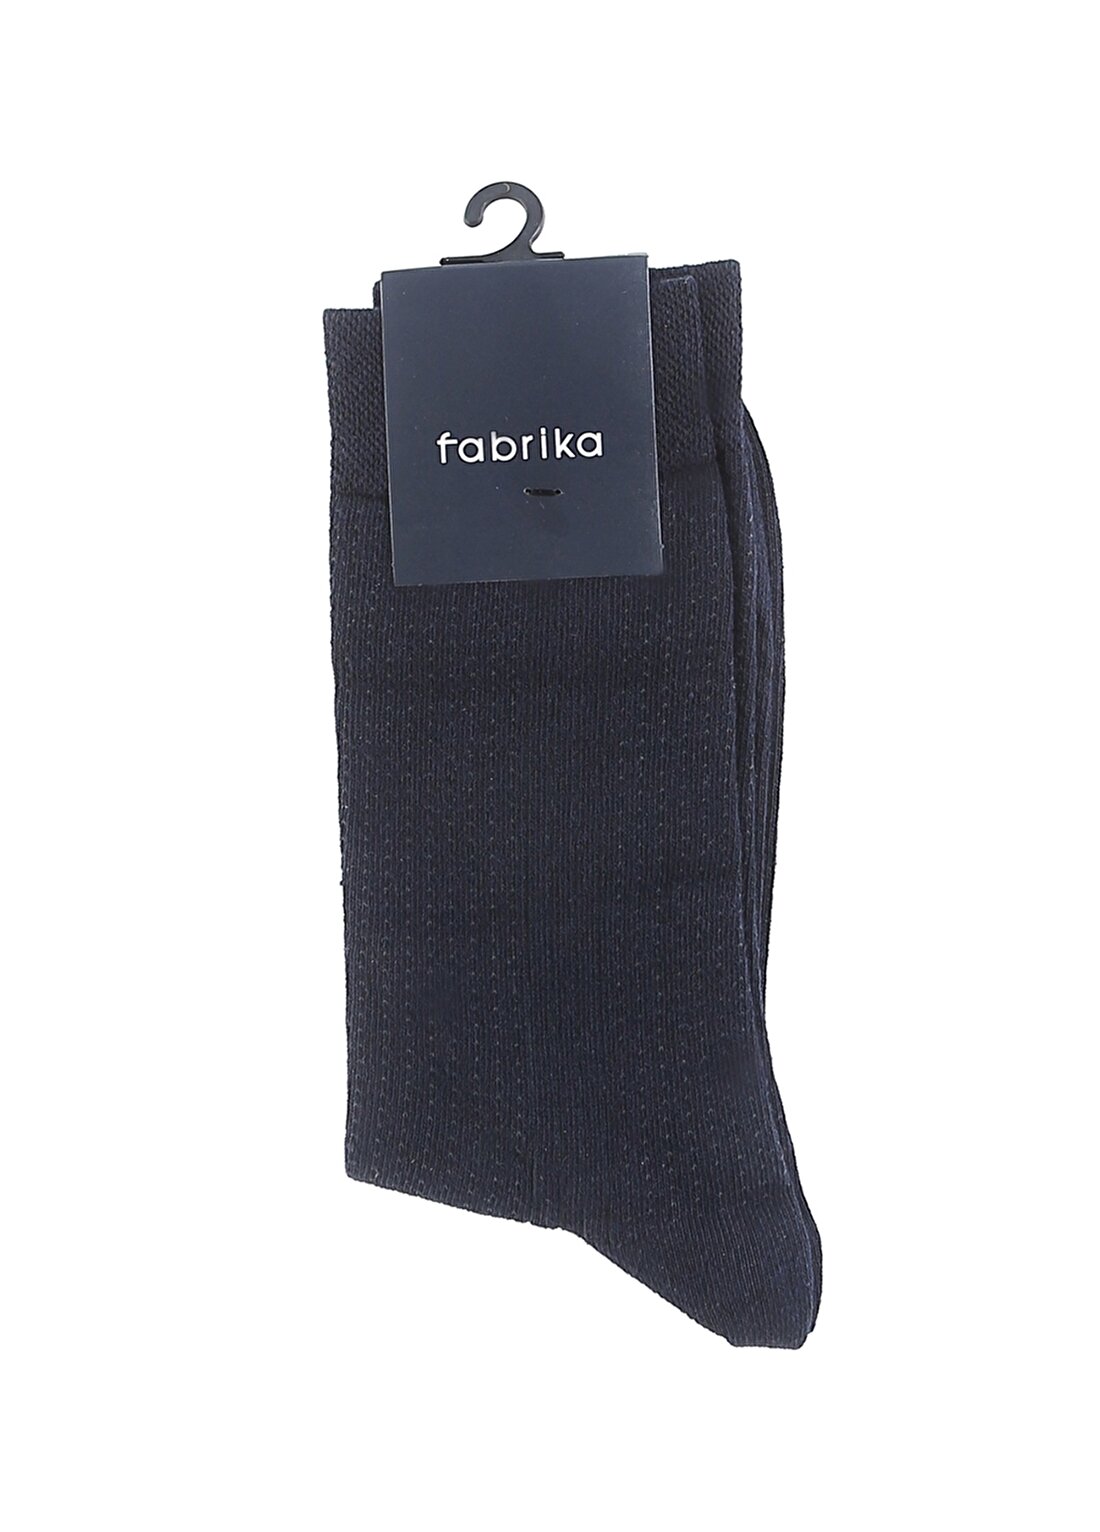 Fabrika Lacivert Erkek Soket Çorap FBRSCK2229